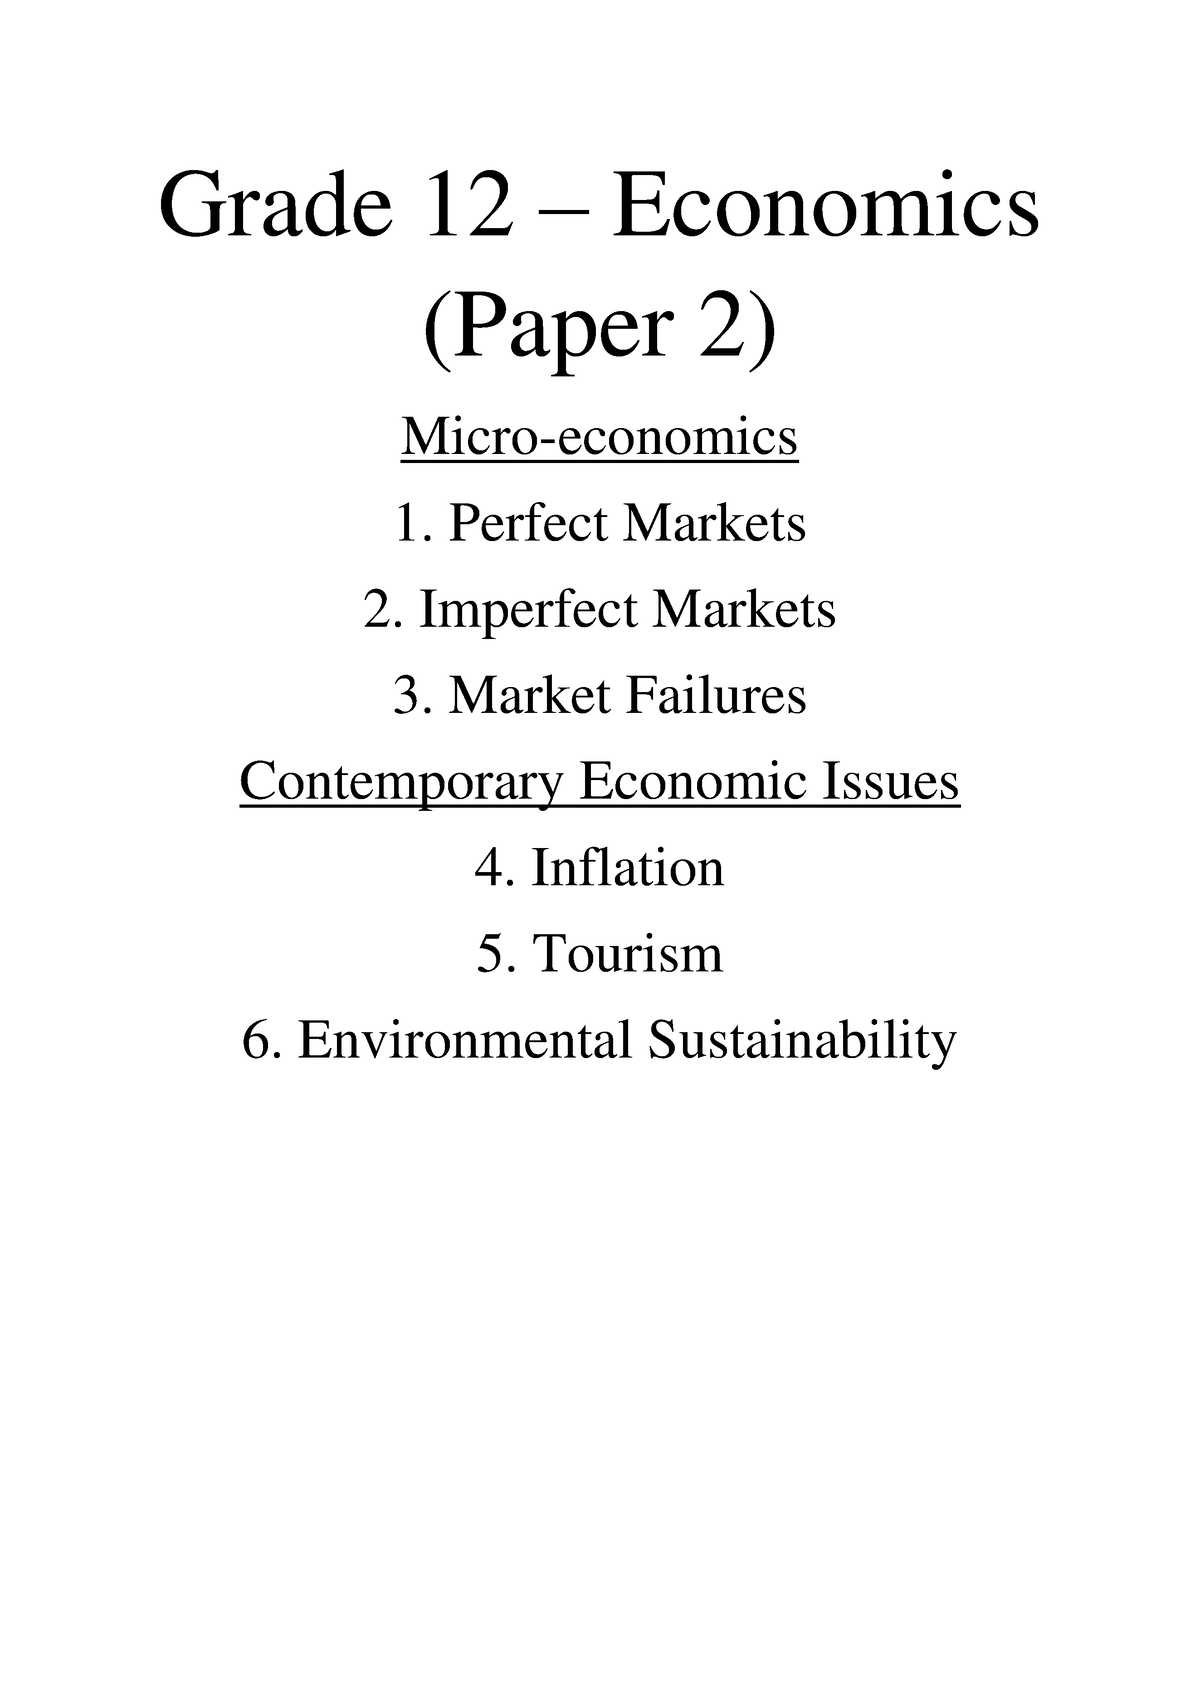 economics paper 2 essays grade 12 pdf